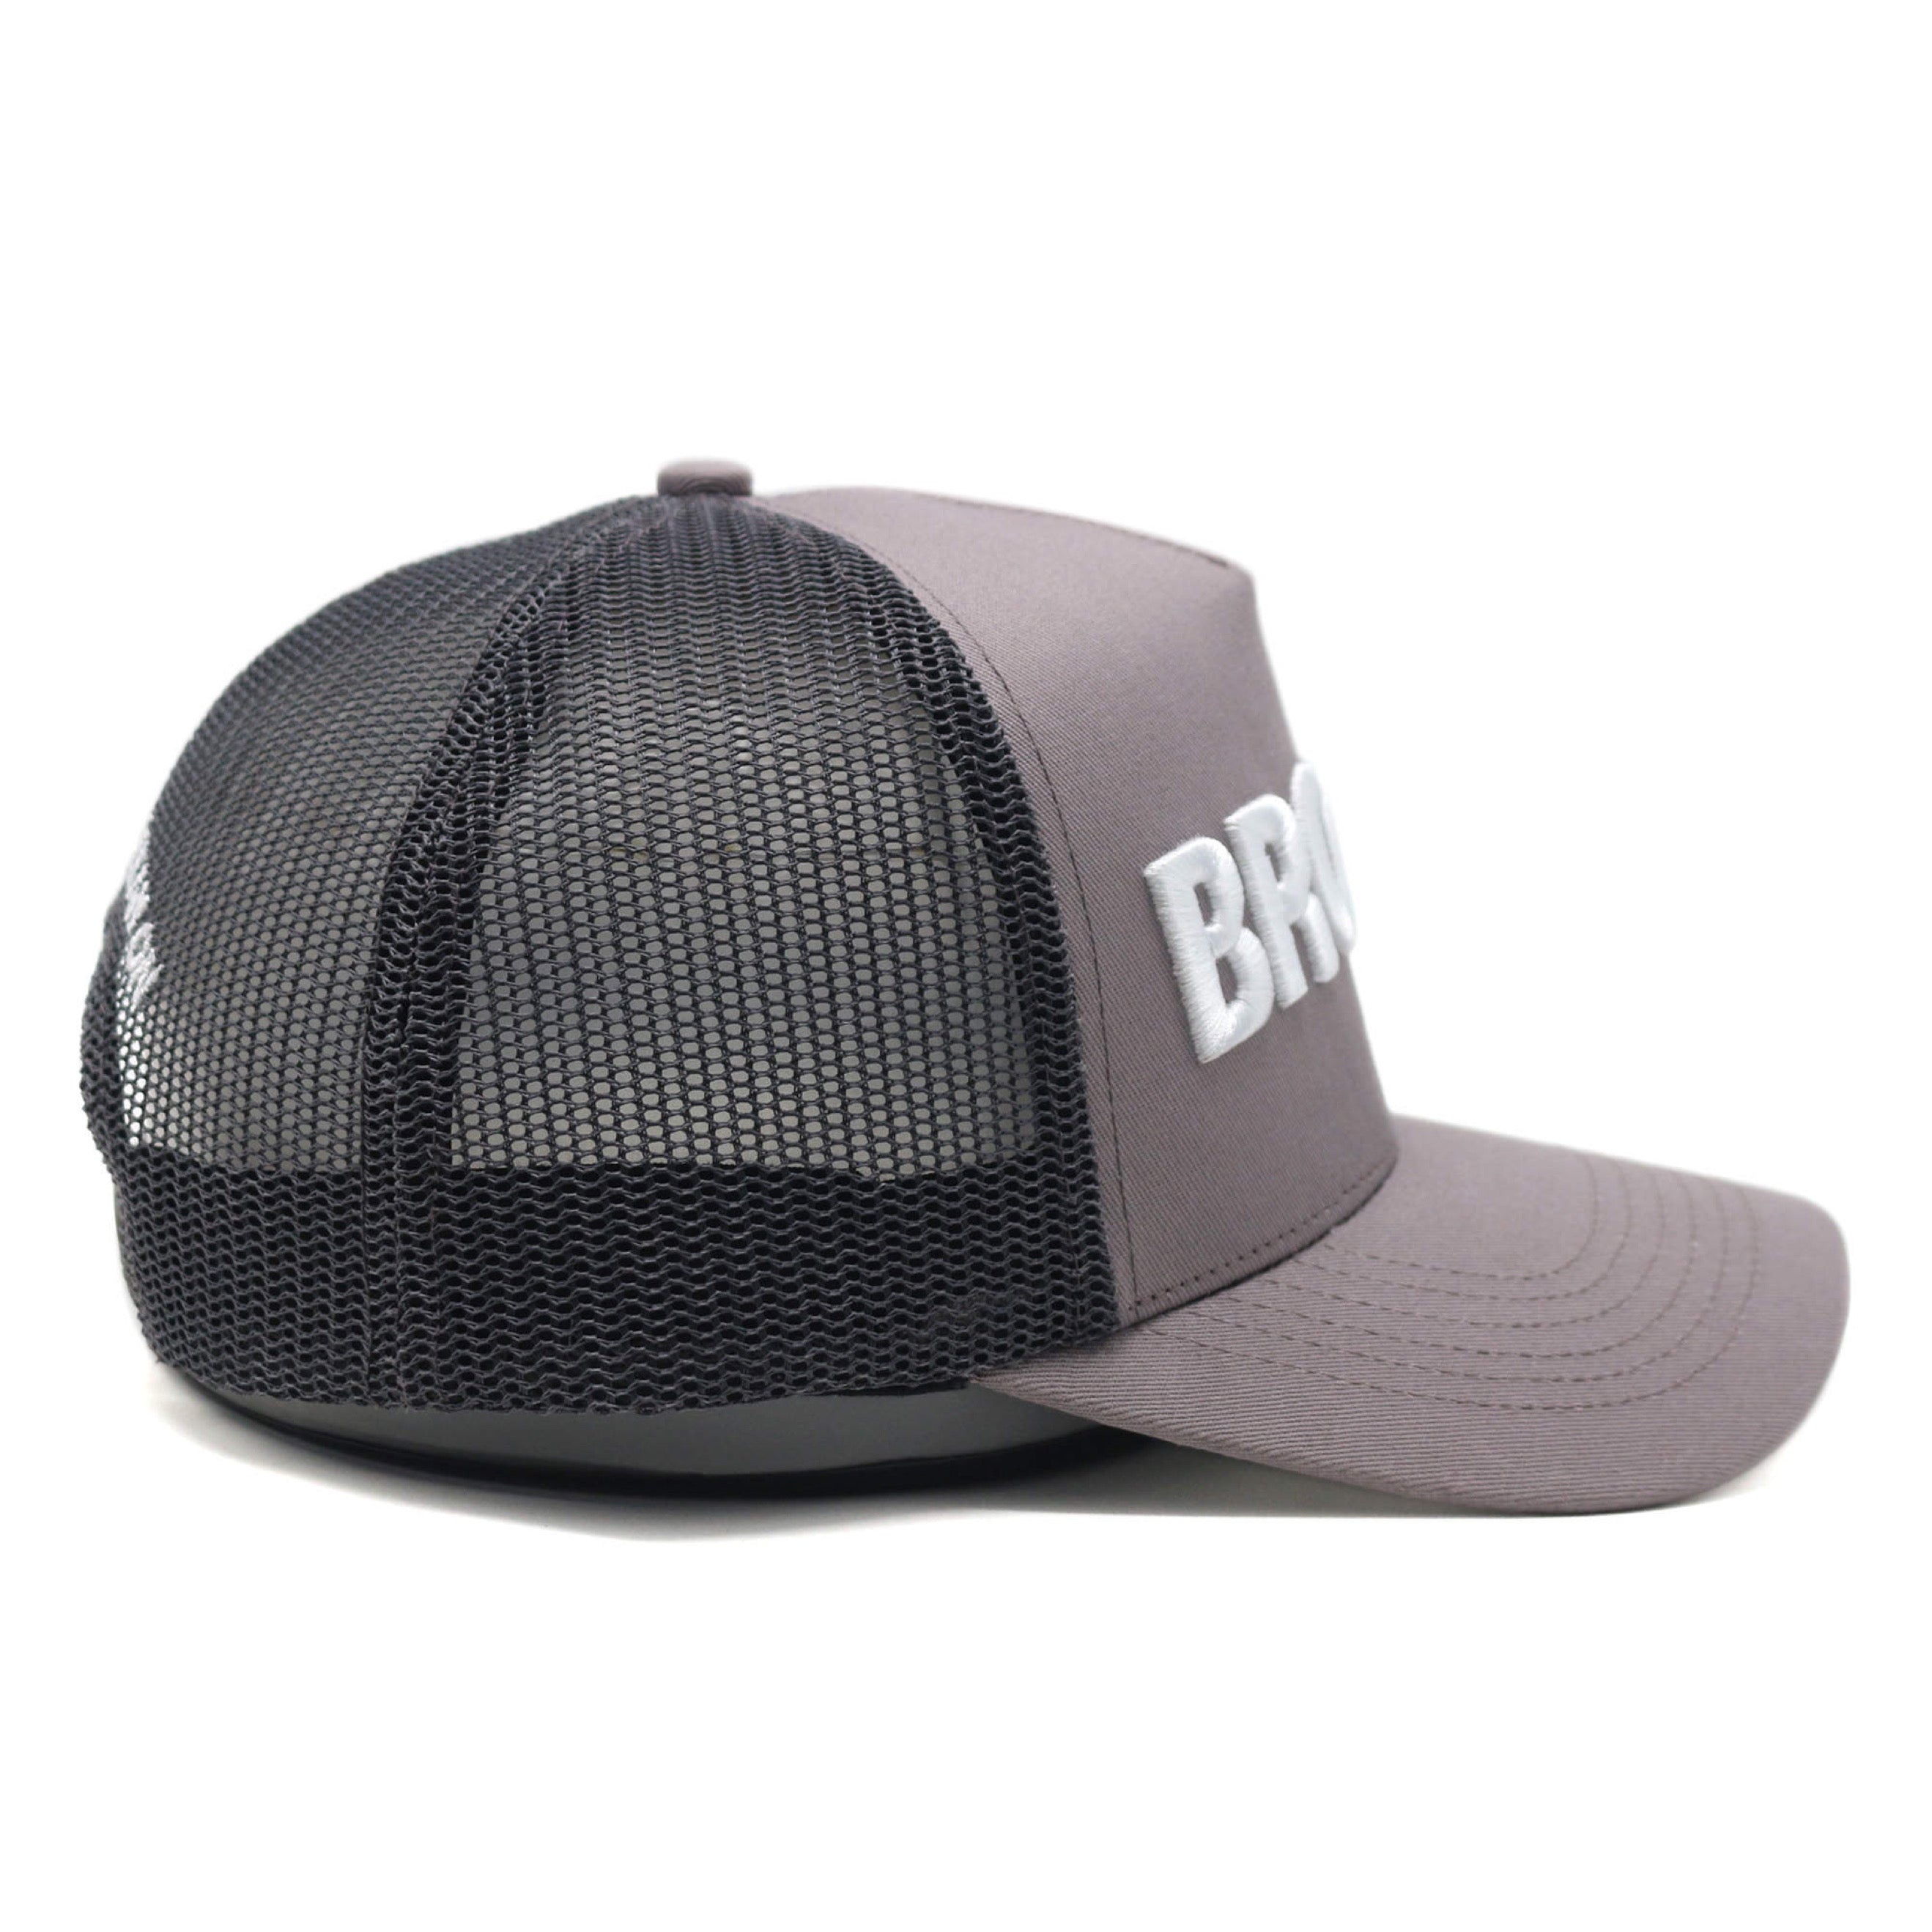 Brolife Trucker Hat